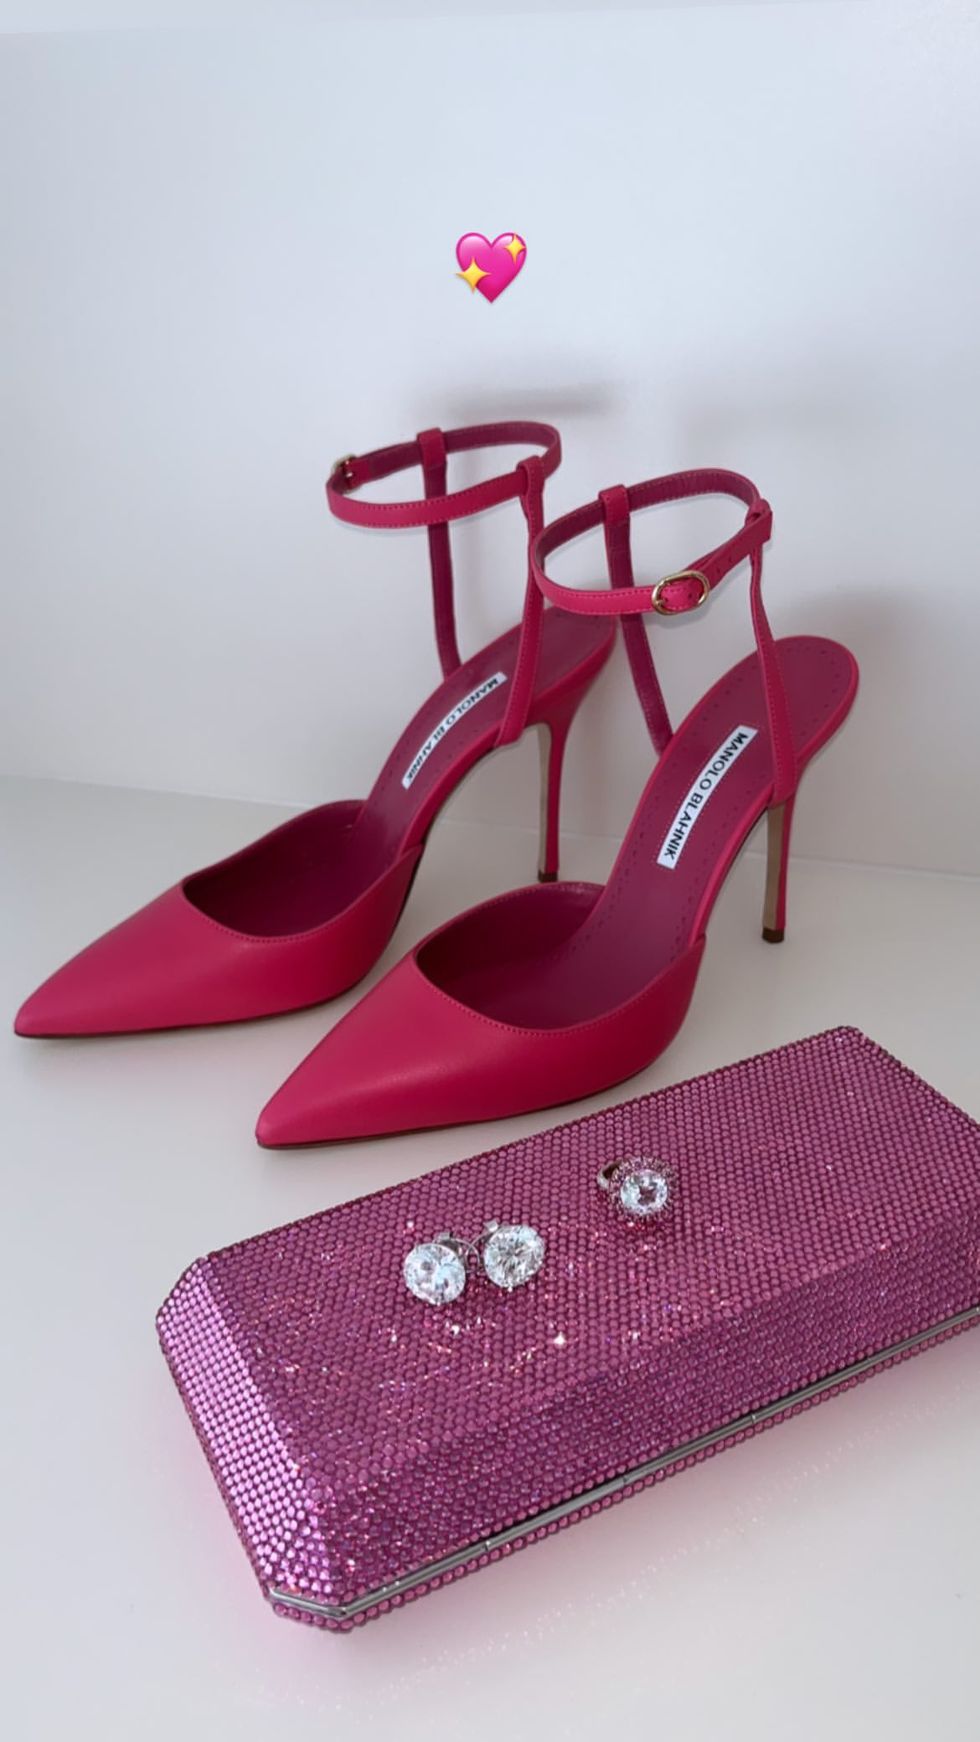 a pair of pink high heels